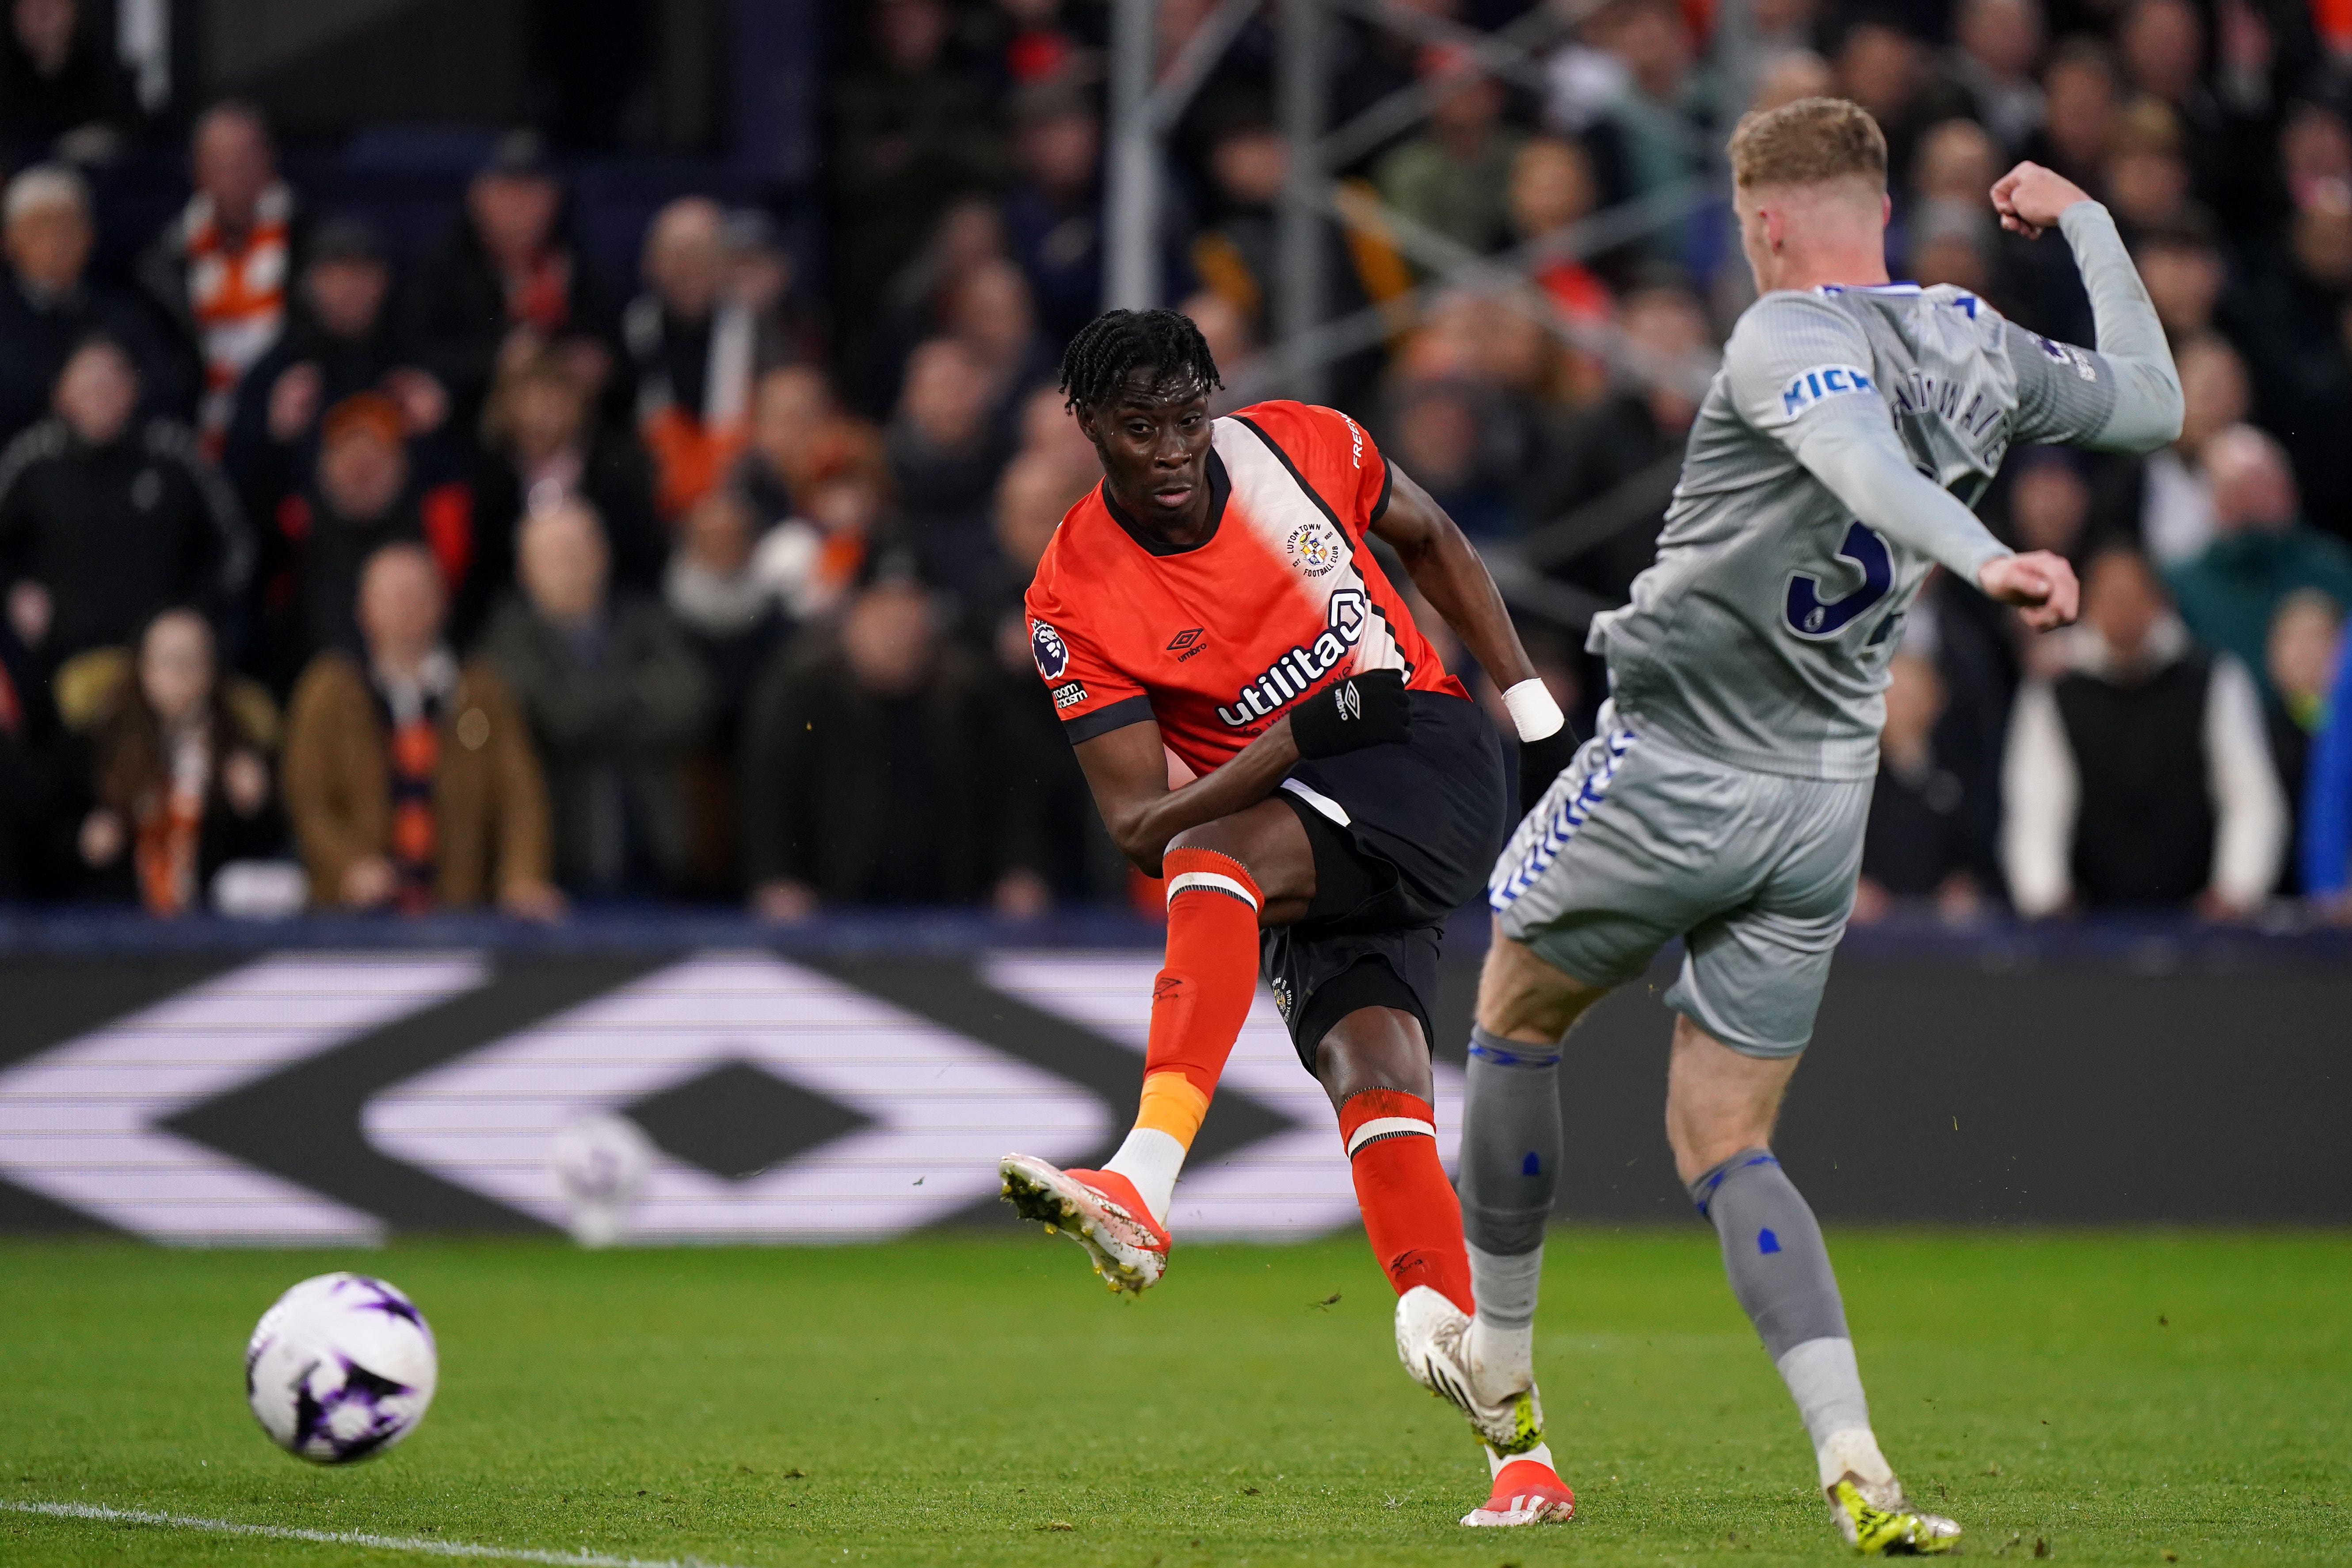 Elijah Adebayo scored a potentially crucial Luton goal